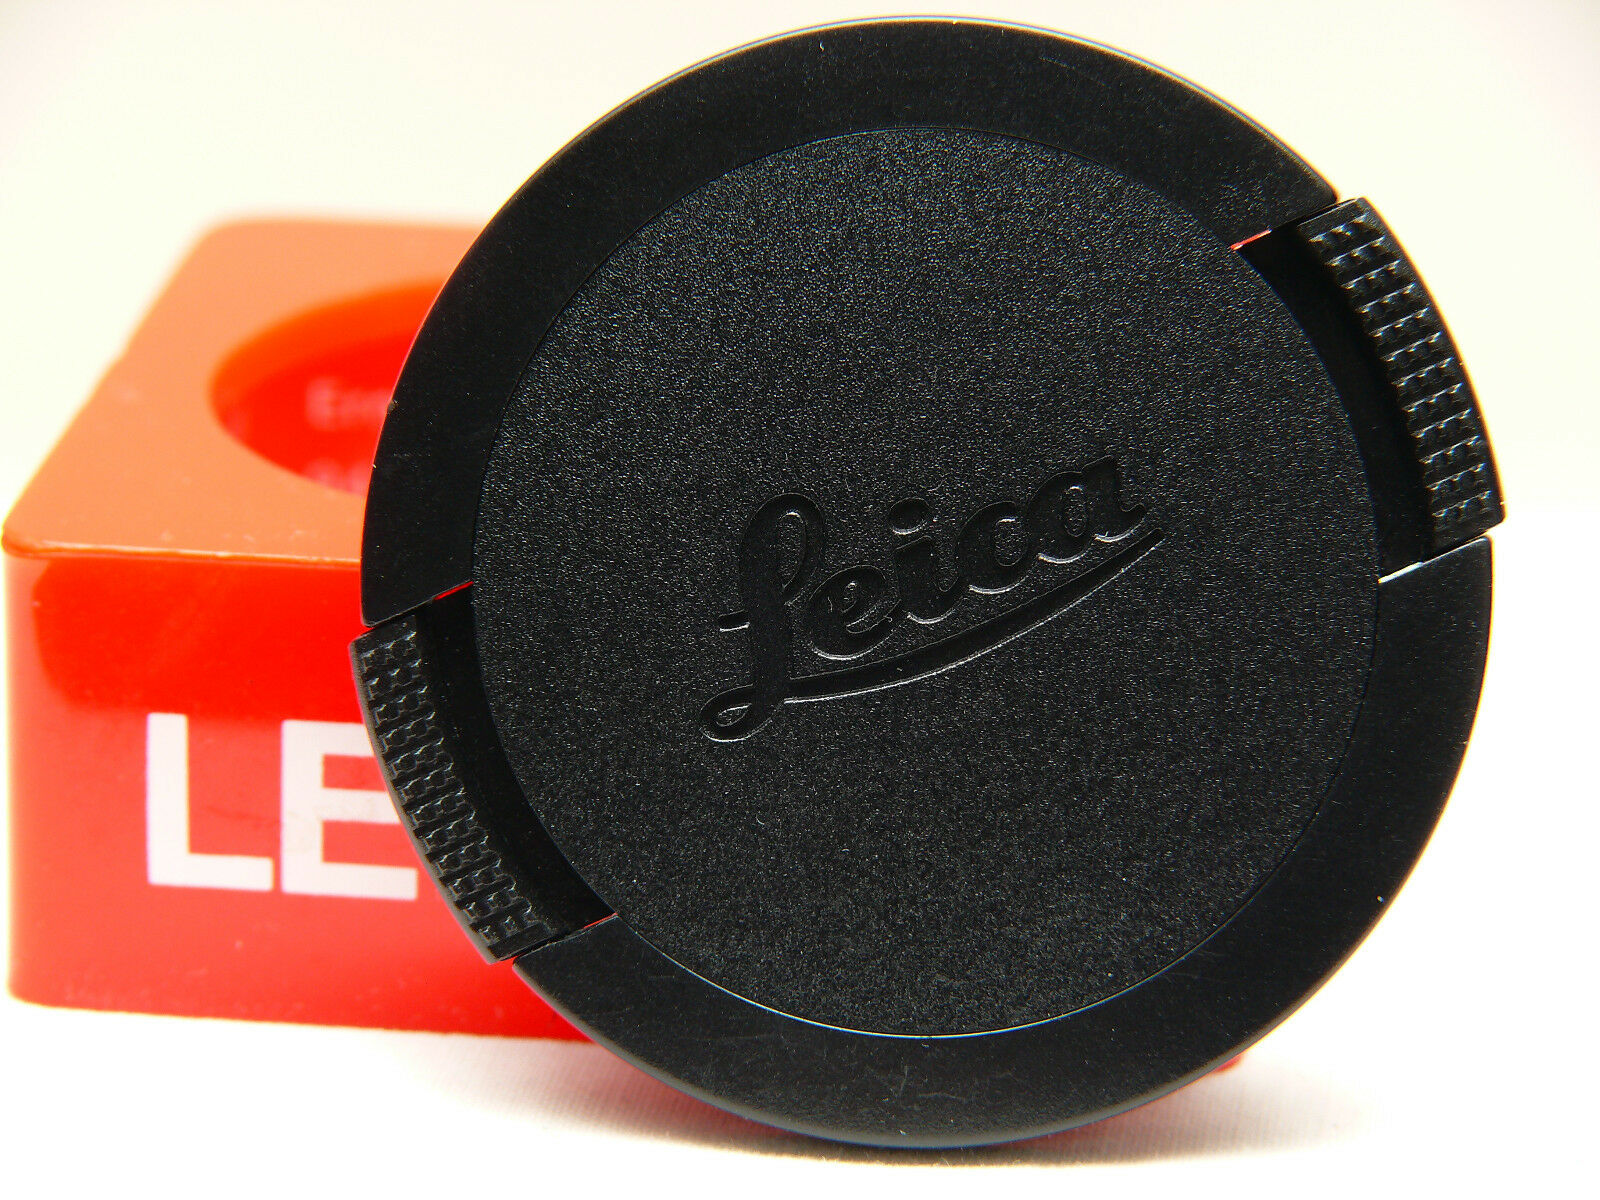 Leitz/Leica Front Lens Cap 49mm No: 14001 for Leica M Lenses.